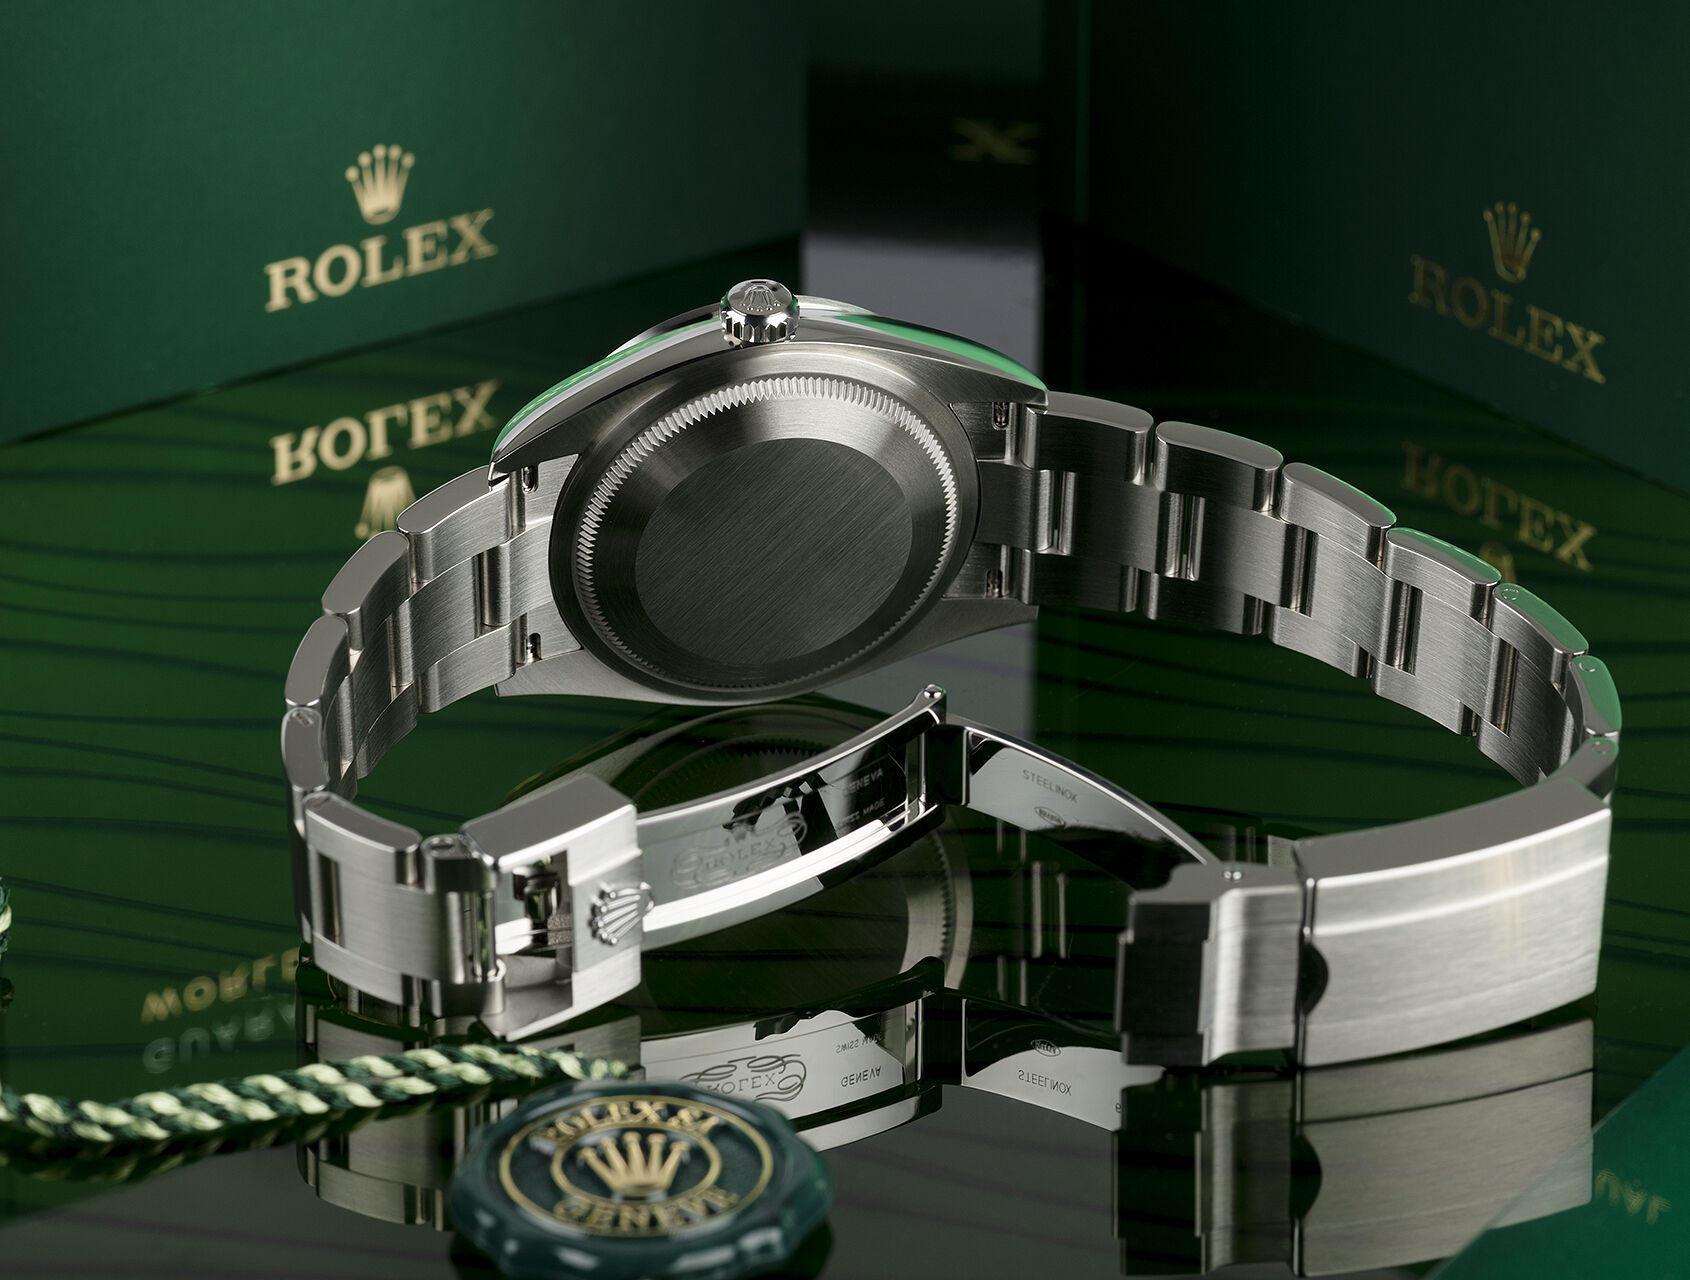 ref 124270 | 124270 - New Model | Rolex Explorer